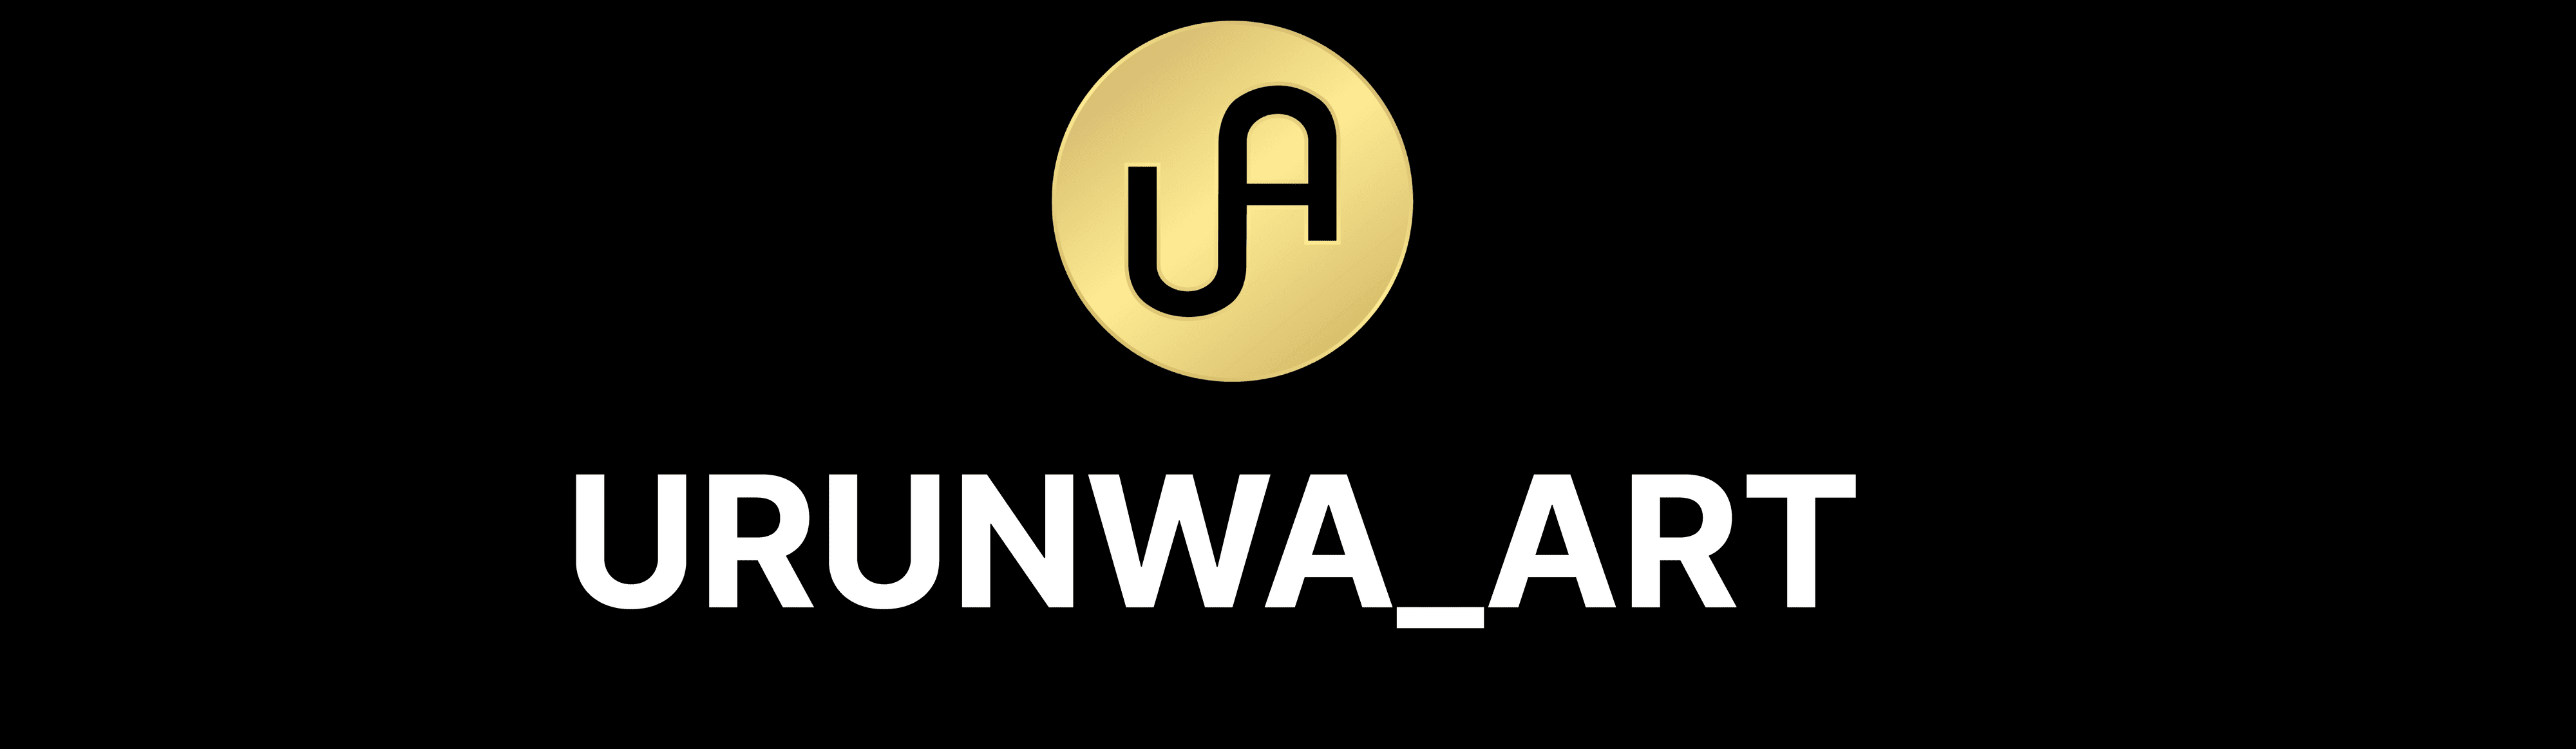 urunwa bannière